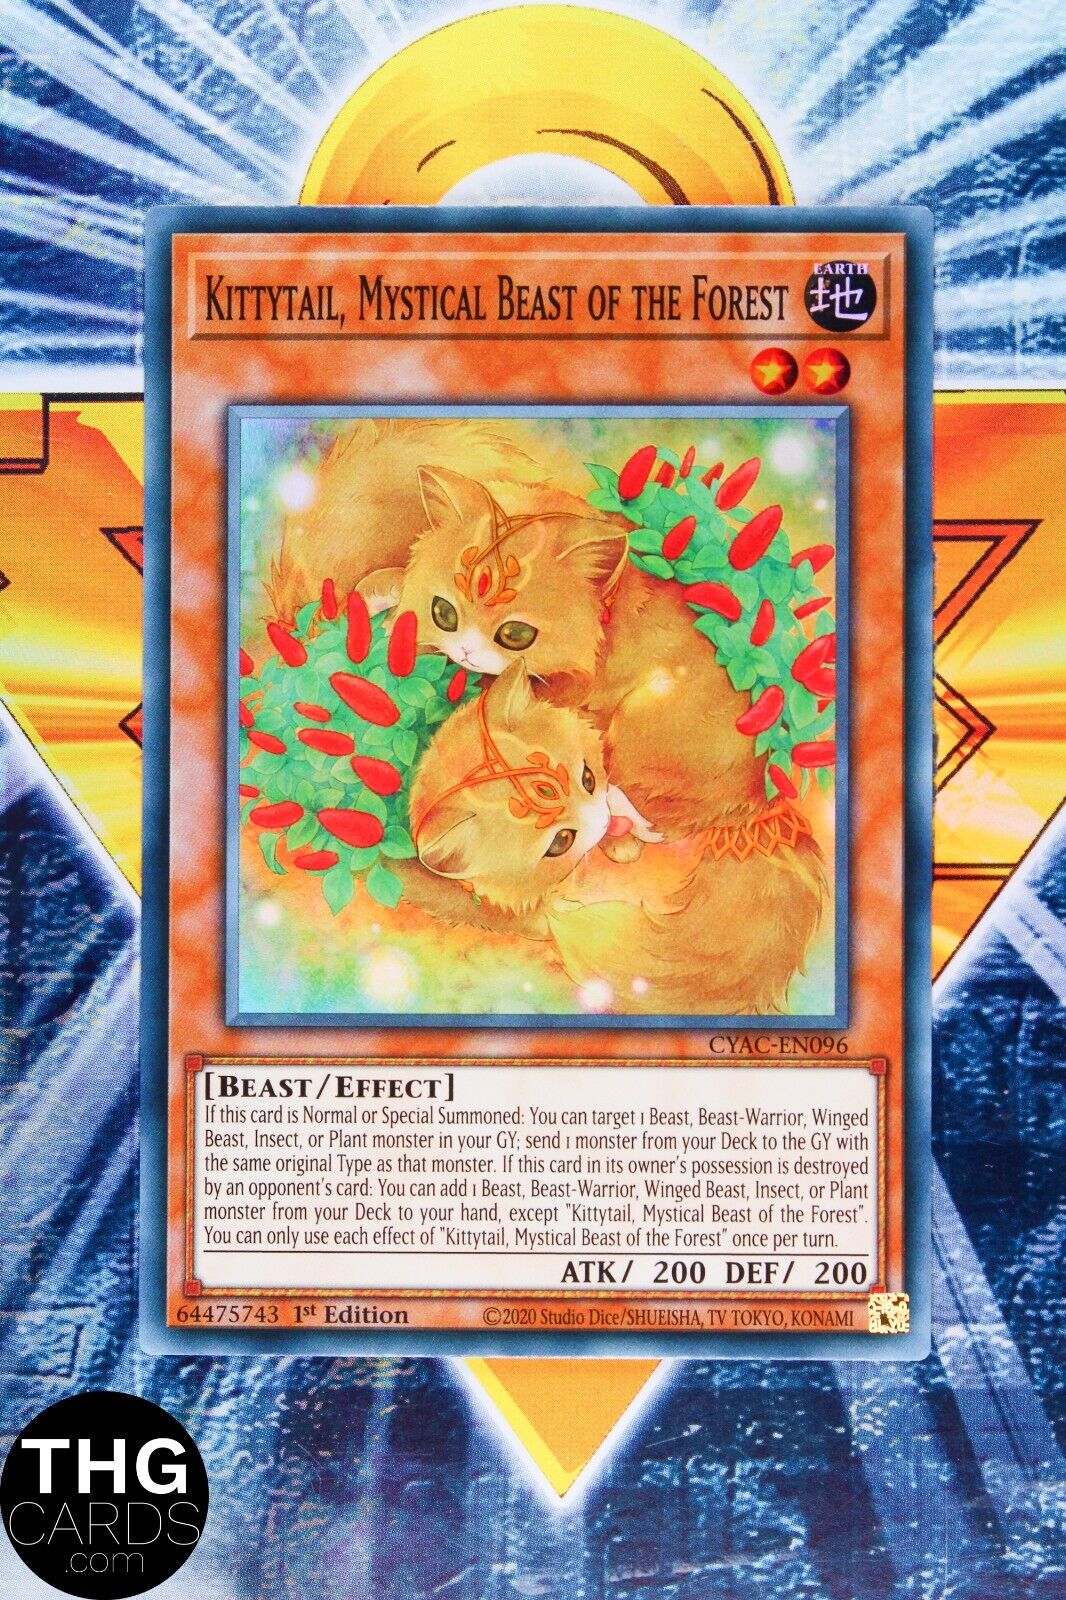 Kittytail Mystical Beast of the Forest CYAC-EN096 Super Rare Yugioh Card Playset